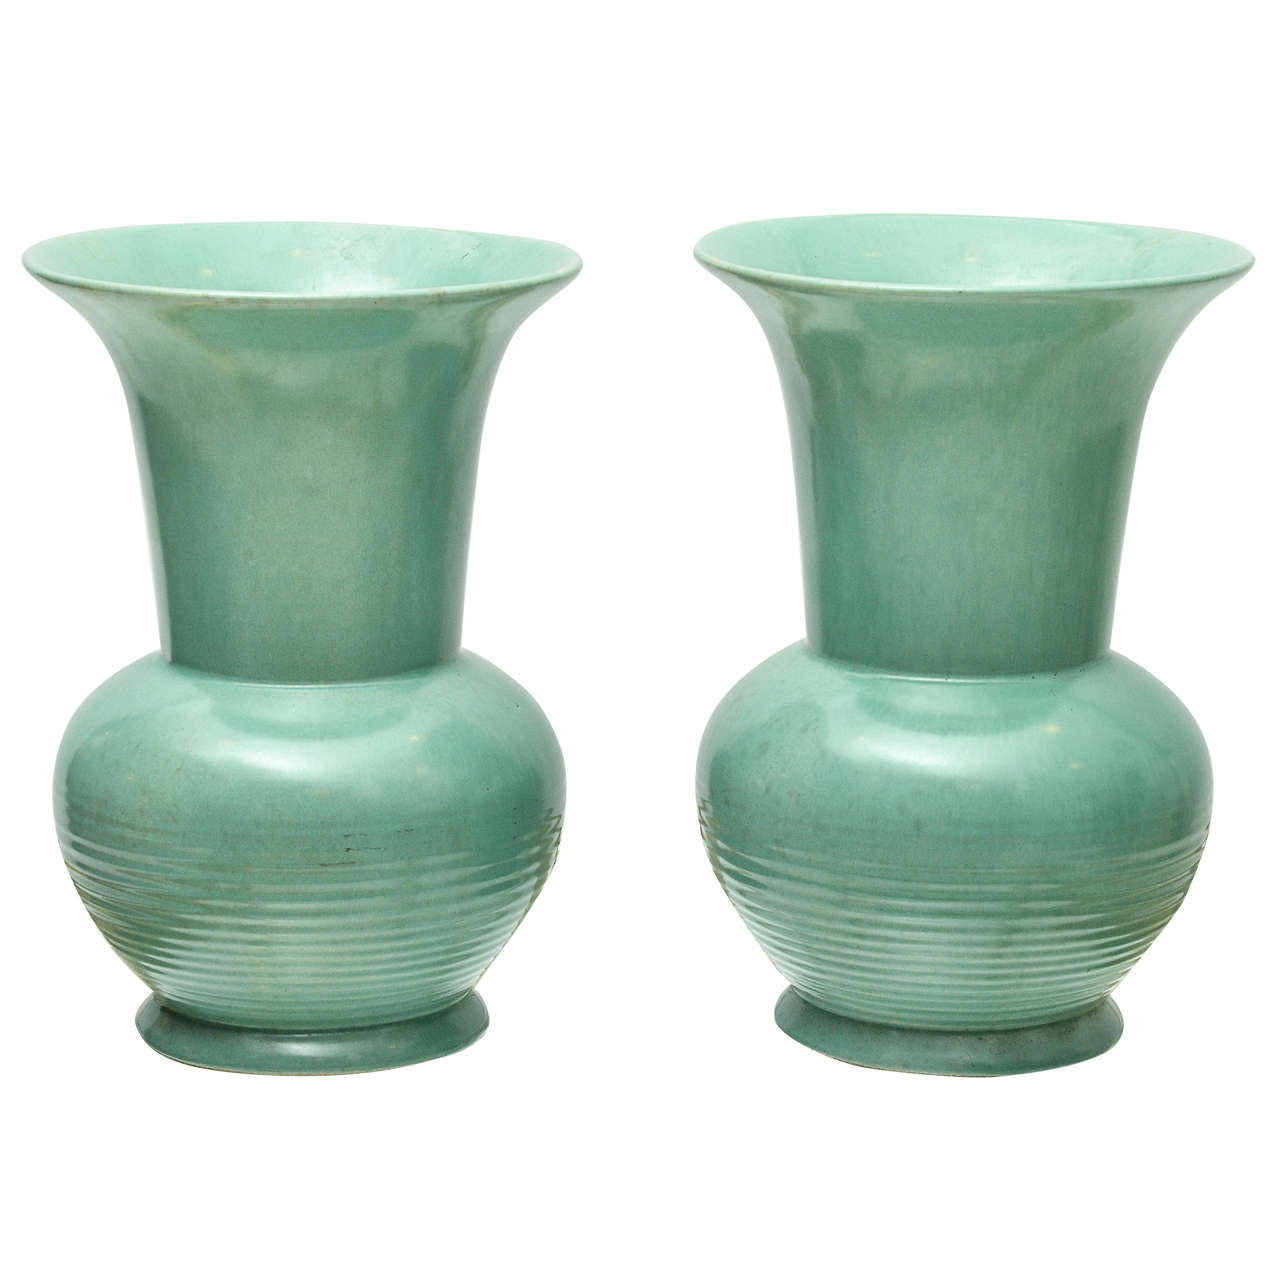 Pair of Mid-Century Modern Belgian Pottery Vases